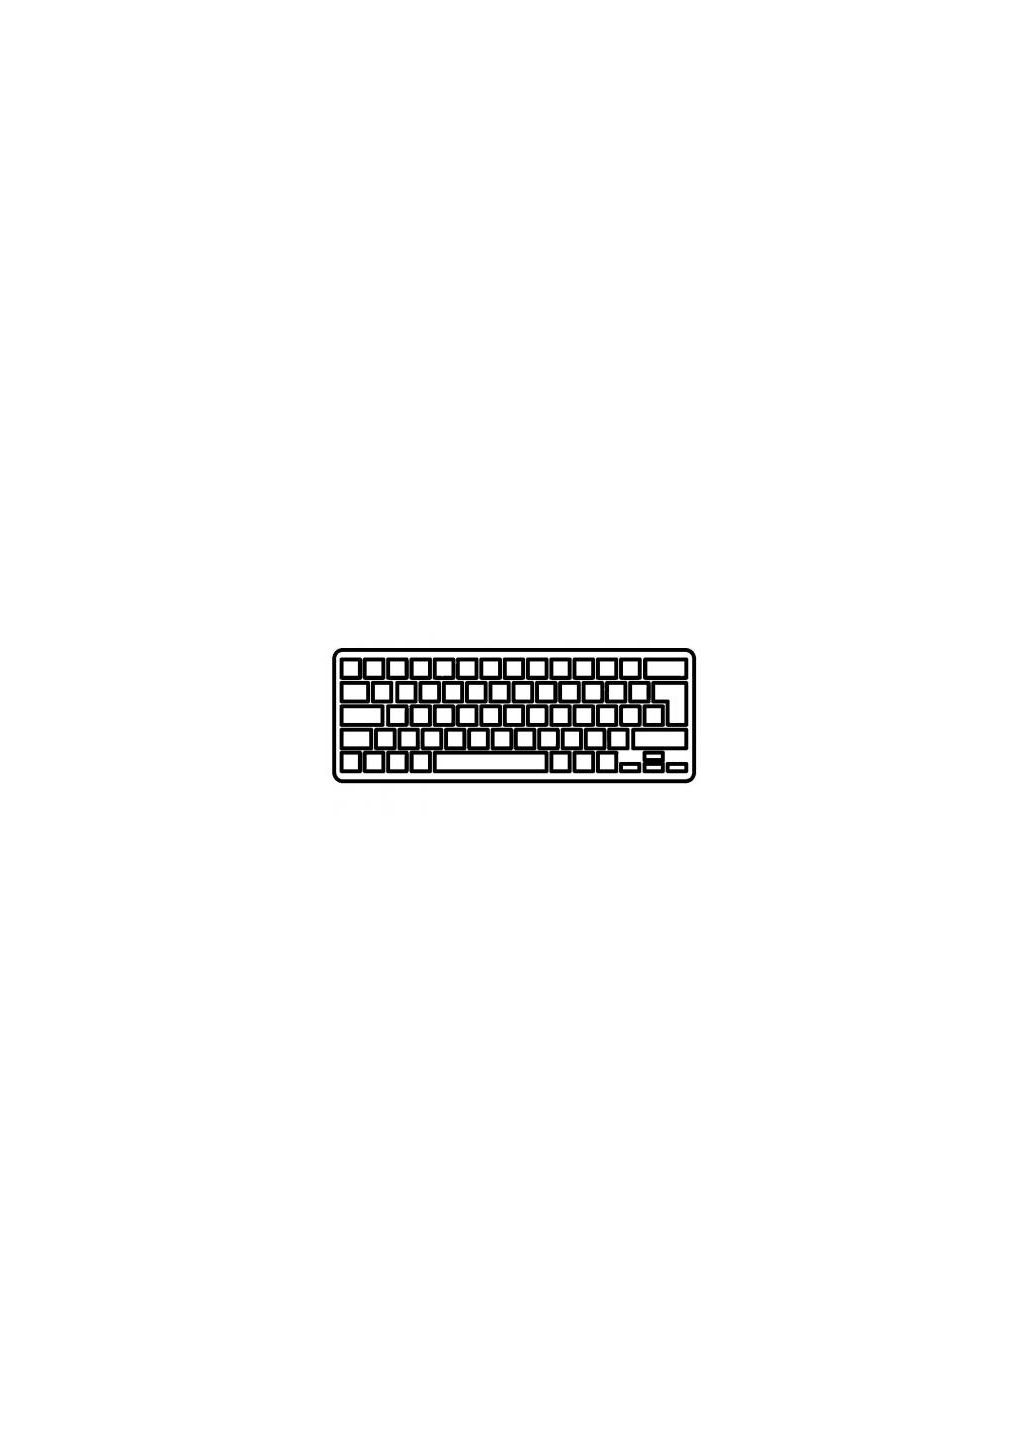 Клавиатура ноутбука (A43557) Asus eee pad slider sl101 коричневая без рамки ua (276706934)